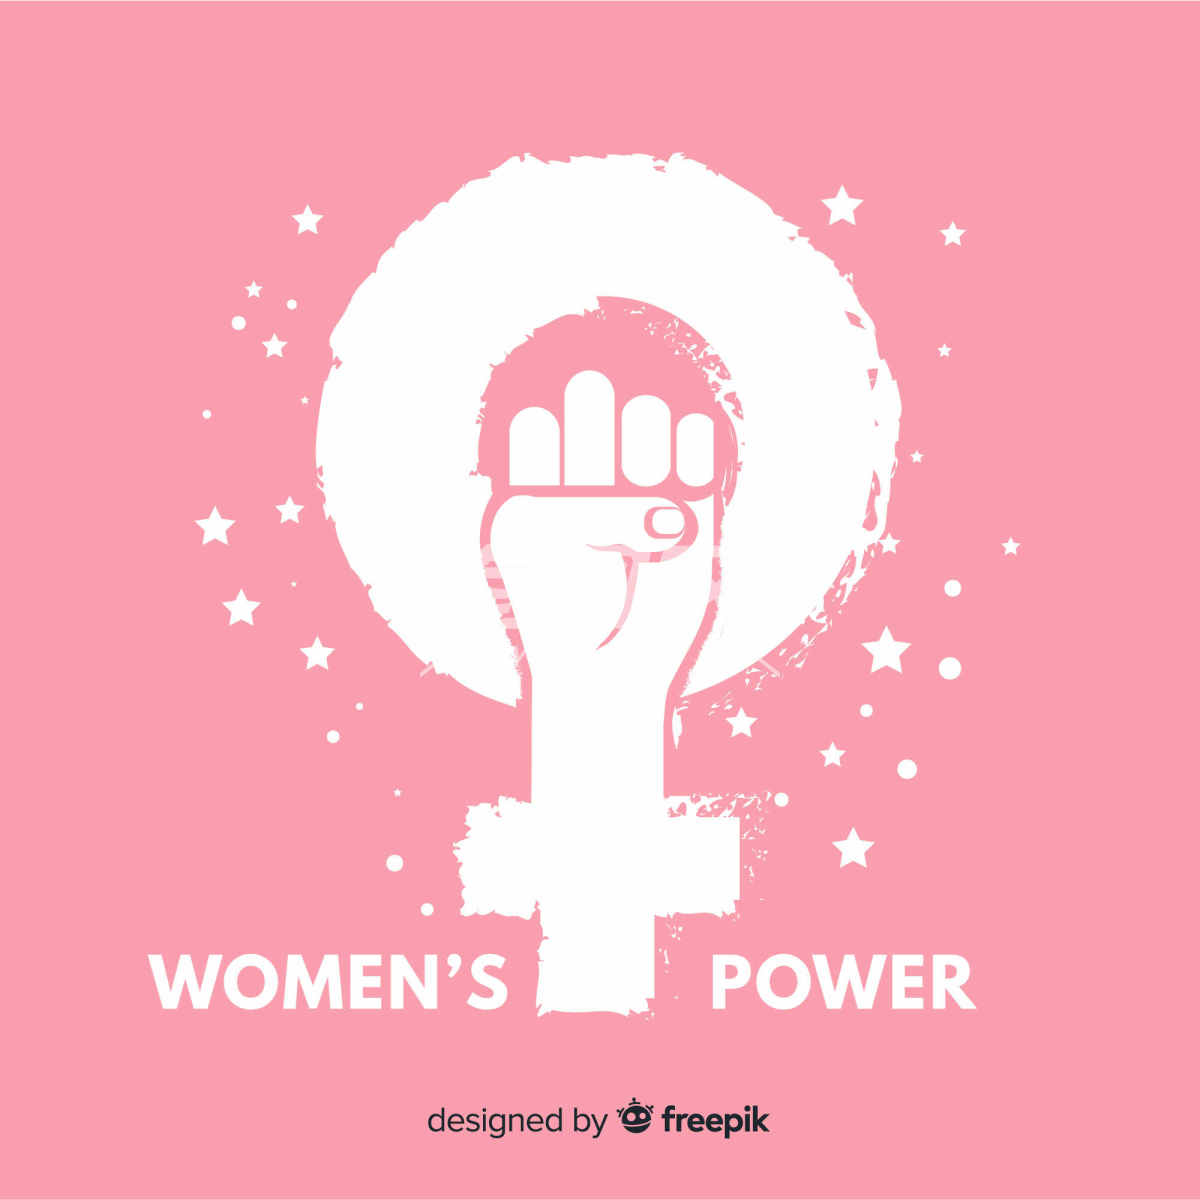 WOMENS POWER 的拳头象征